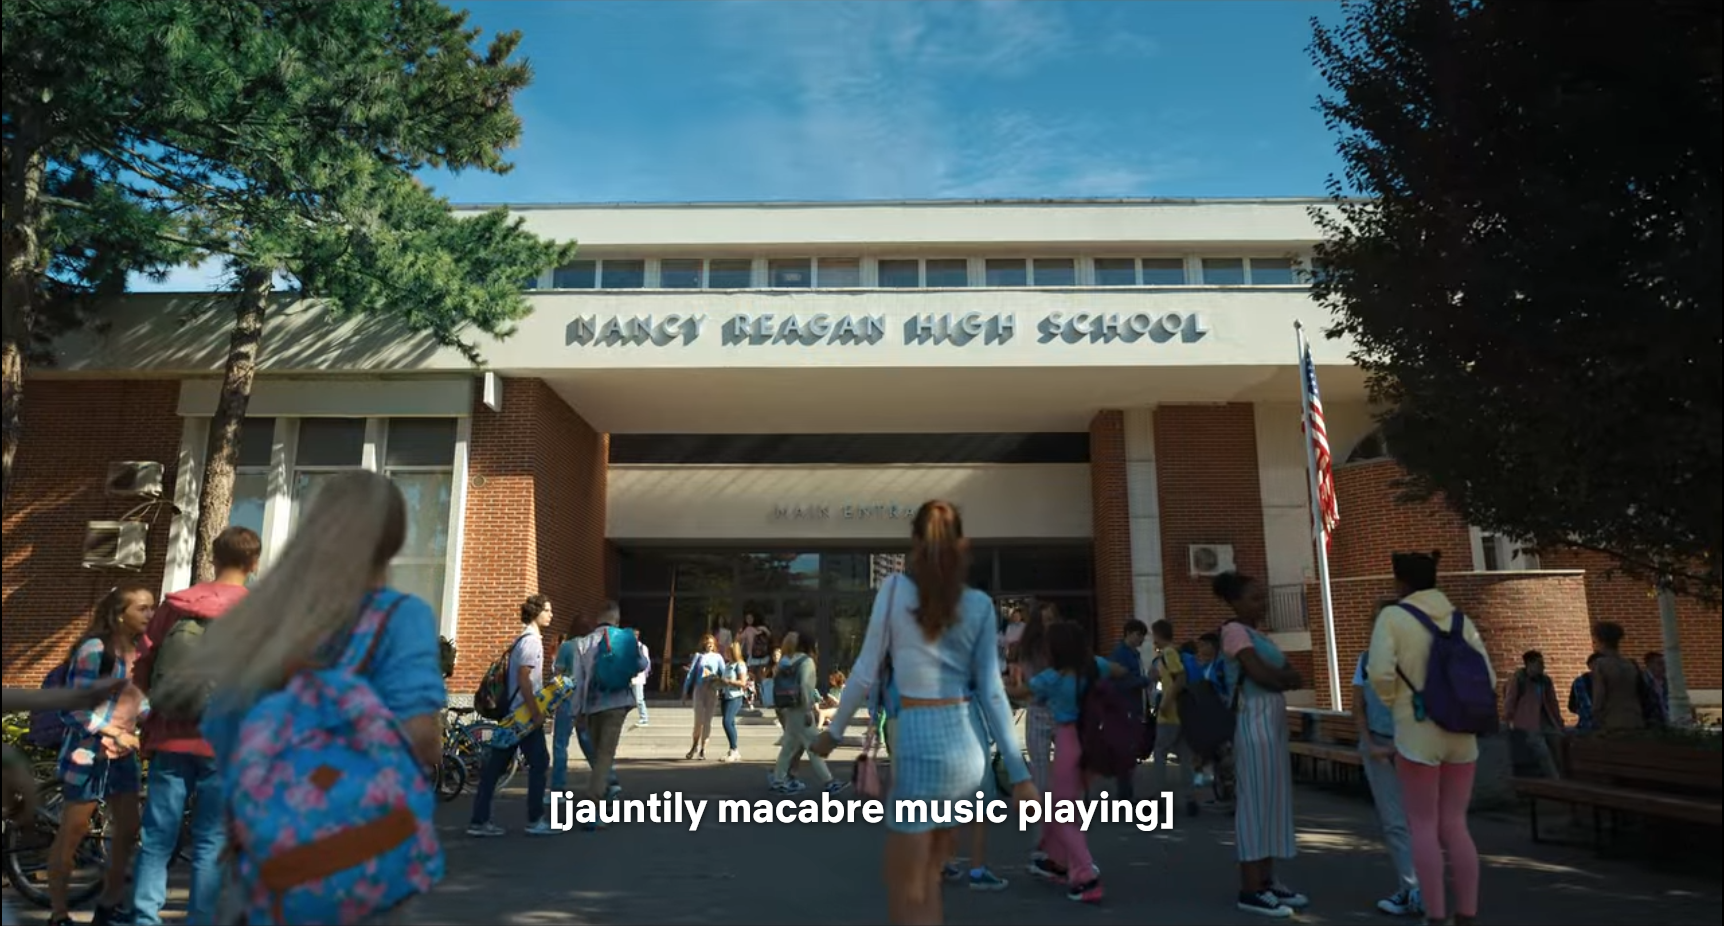 Nancy Reagan High School as shown in Wednesday